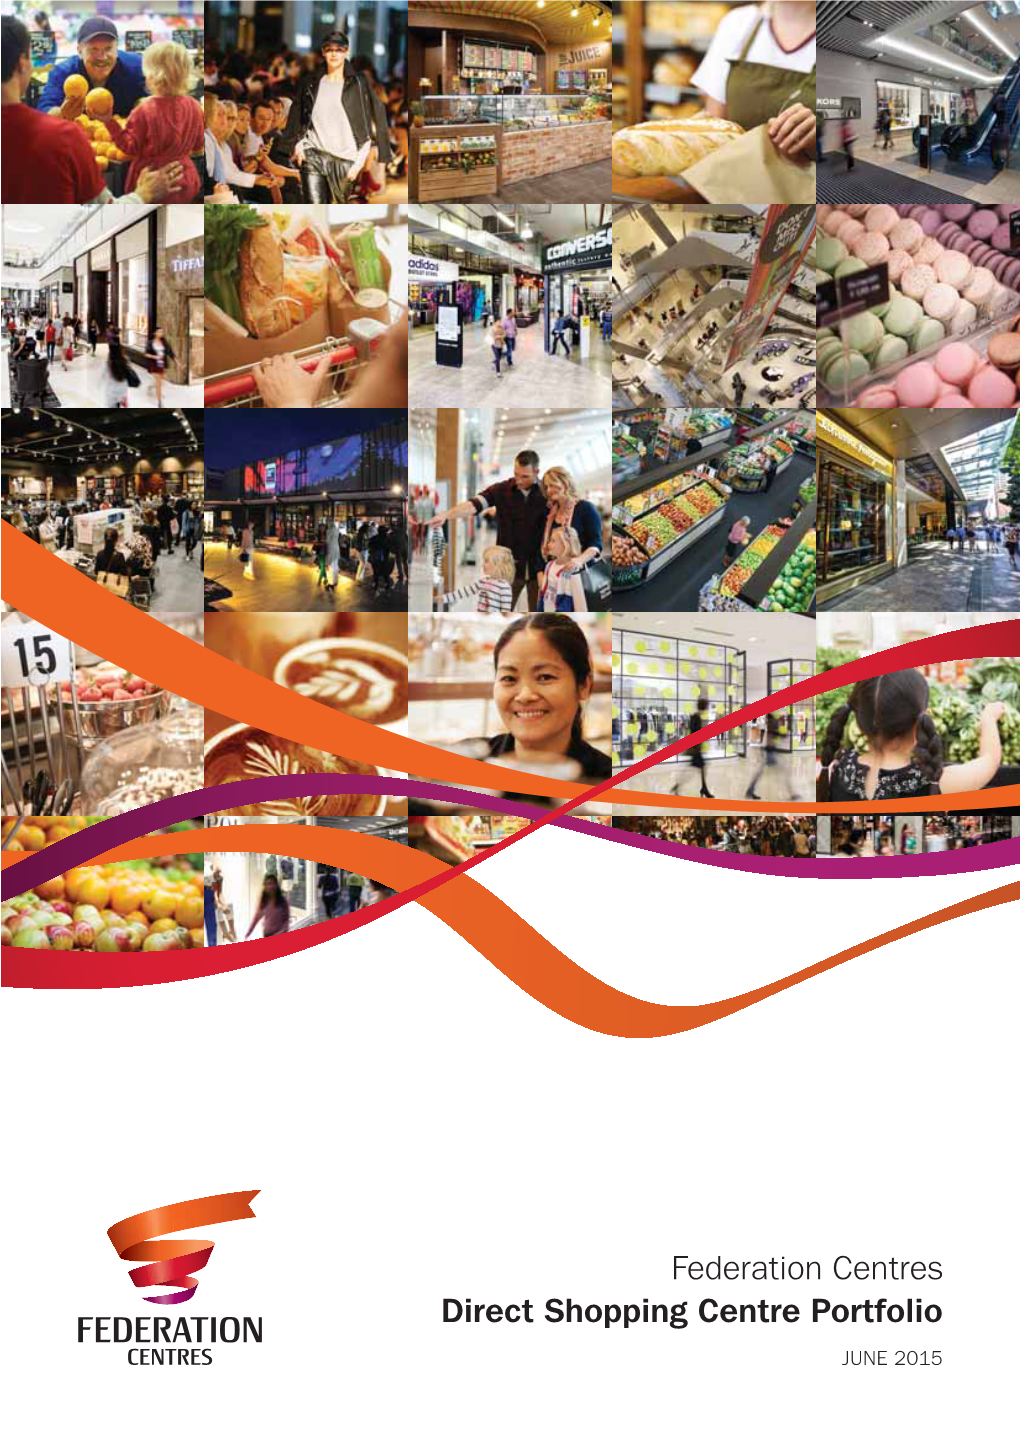 Federation Centres Direct Shopping Centre Portfolio JUNE 2015 CONTENTS